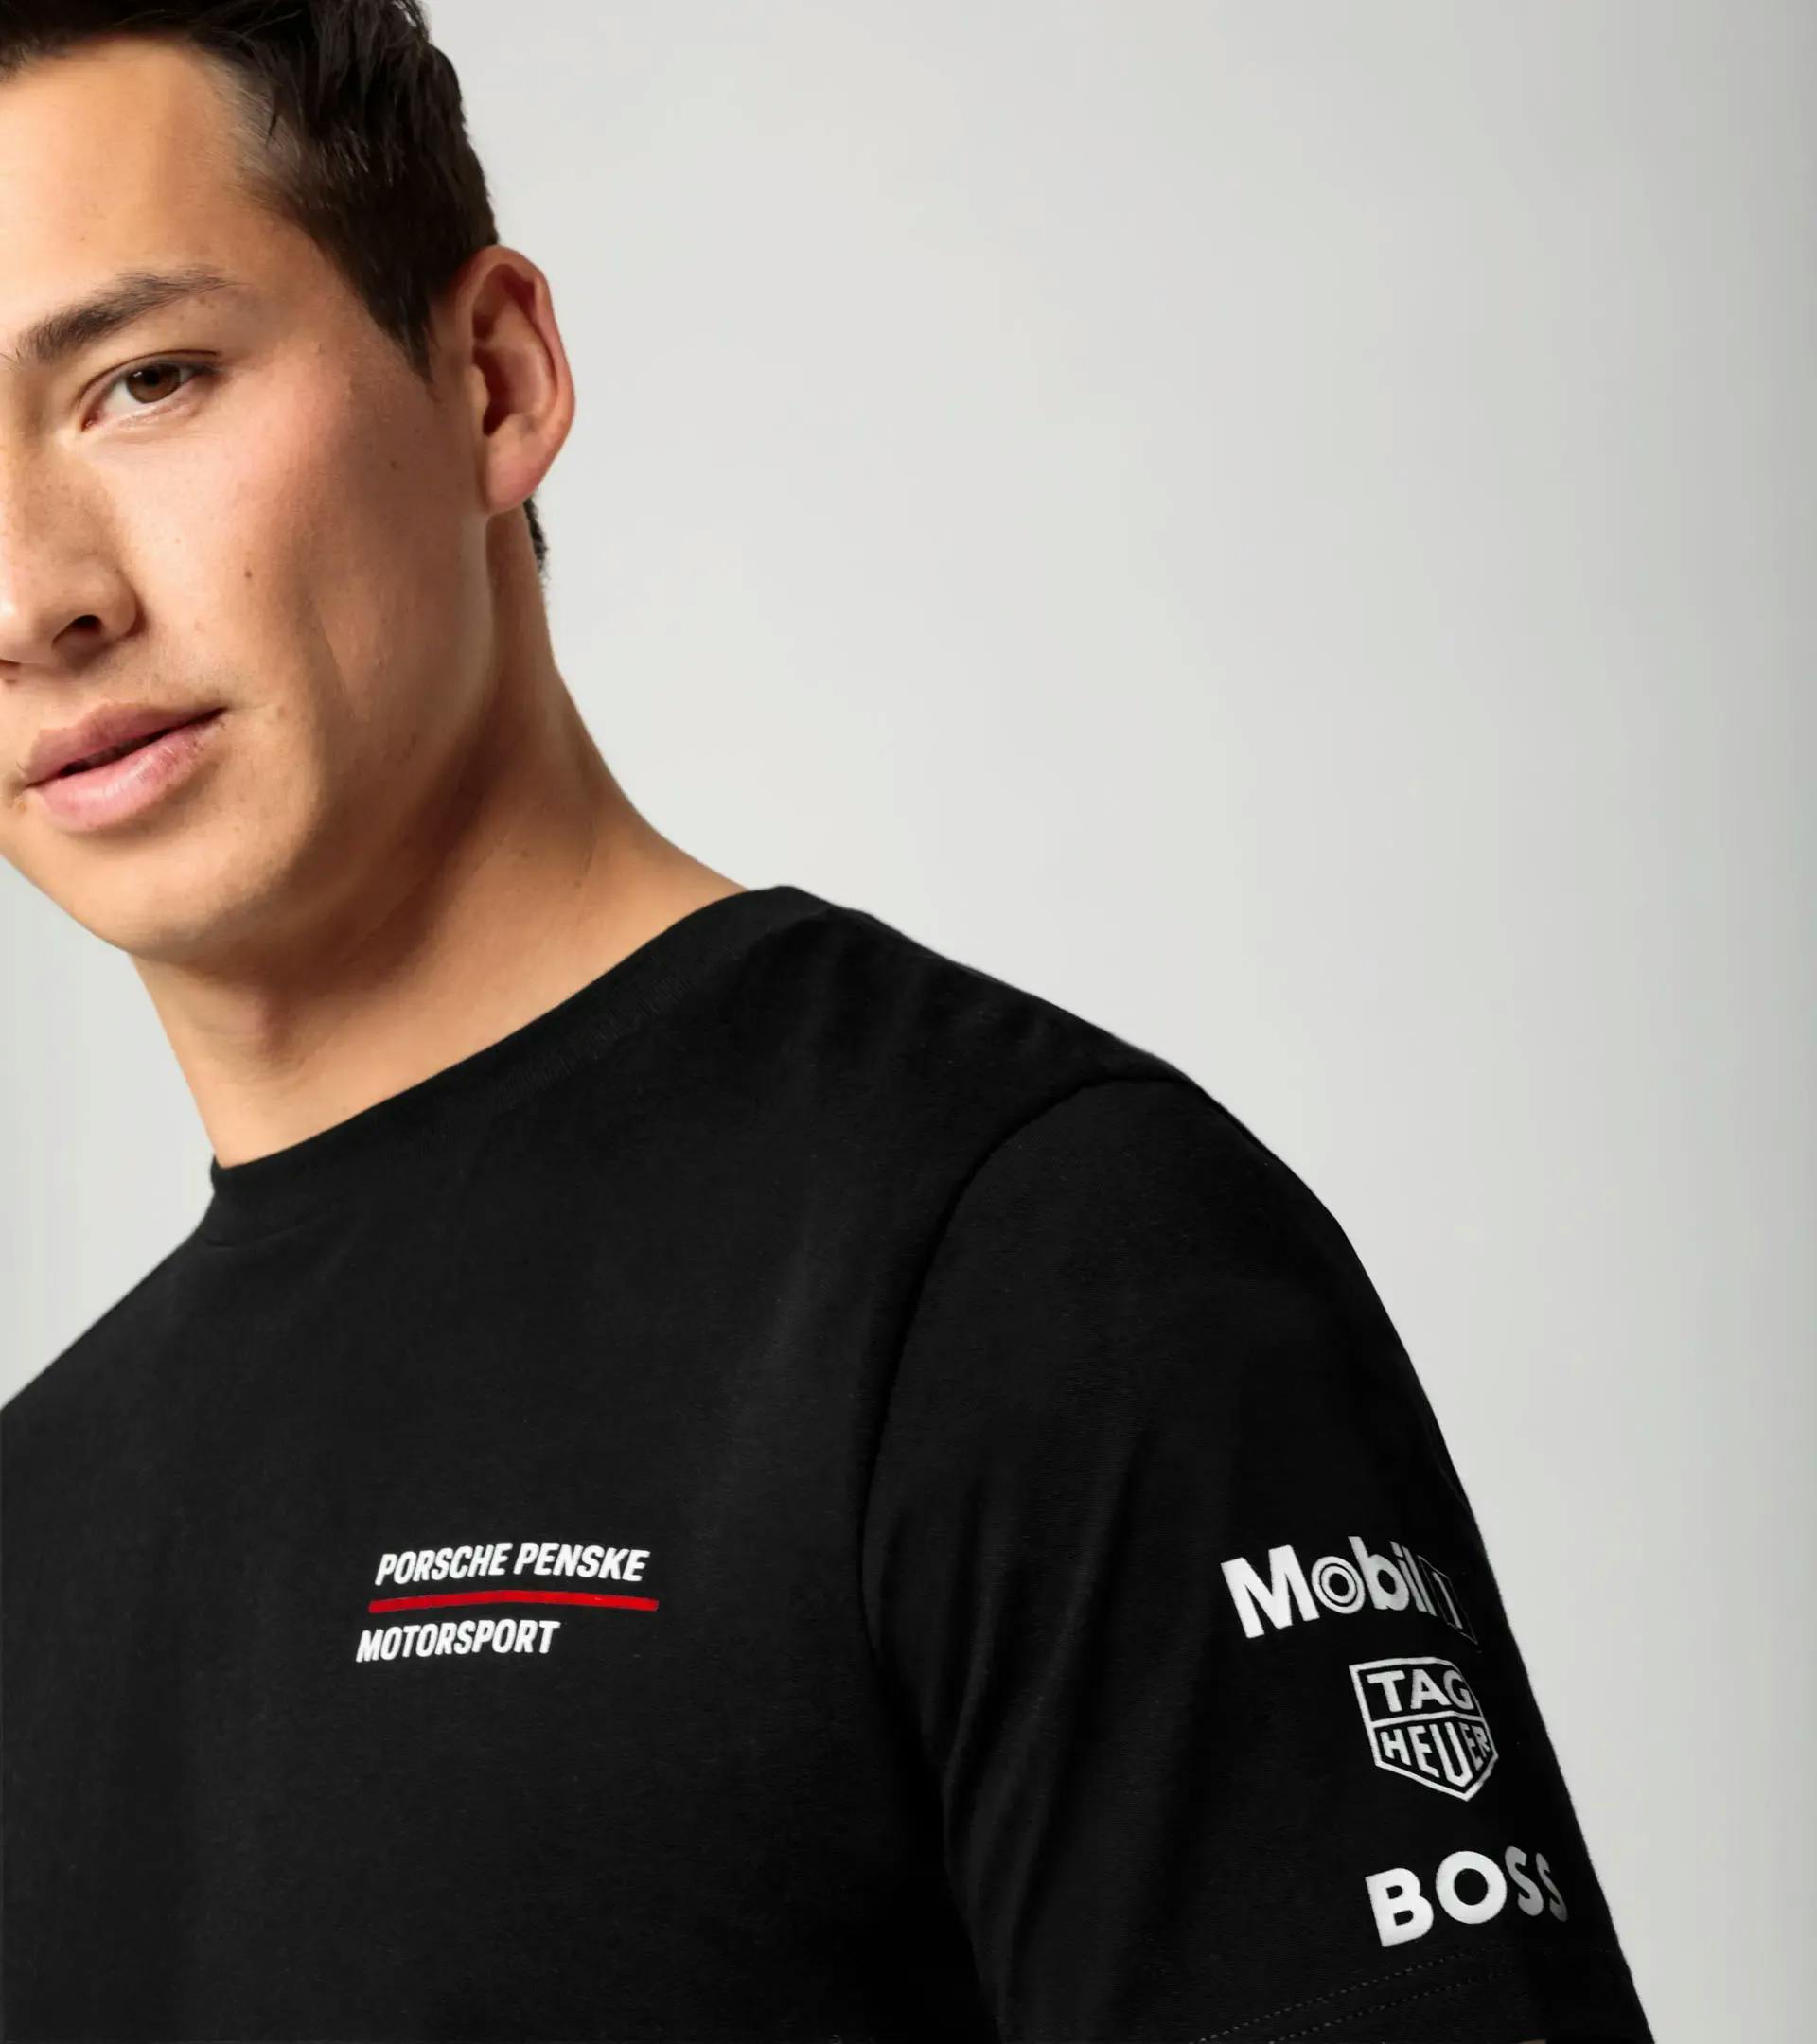 T-shirt unisex – Porsche Penske Motorsport 4